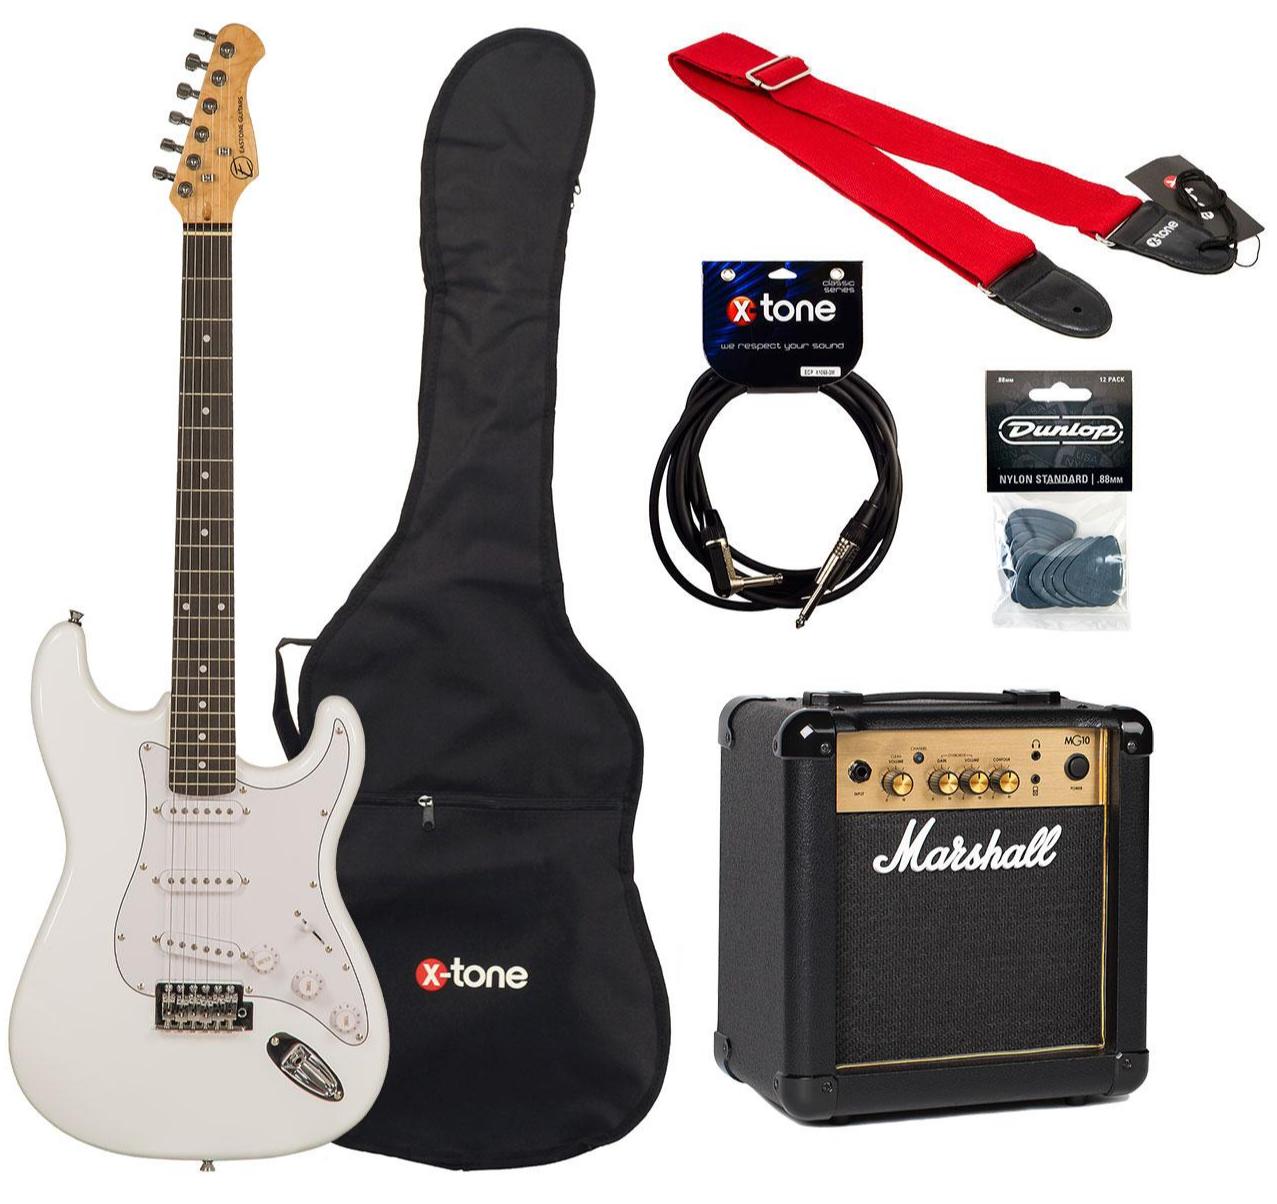 Elektrische gitaar set Eastone STR70 +Marshall MG10G +Accessories - Olympic white